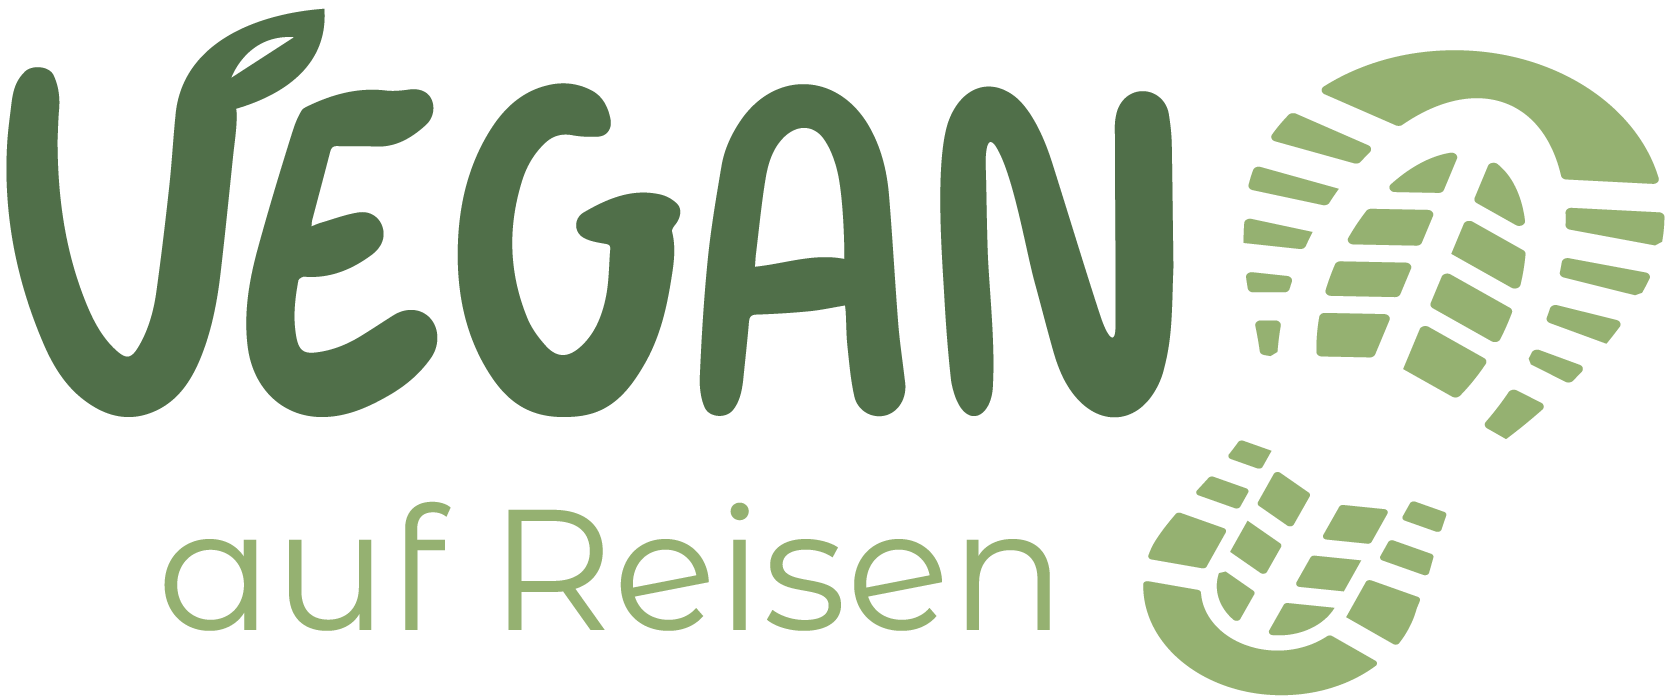 Vegan auf Reisen Logo